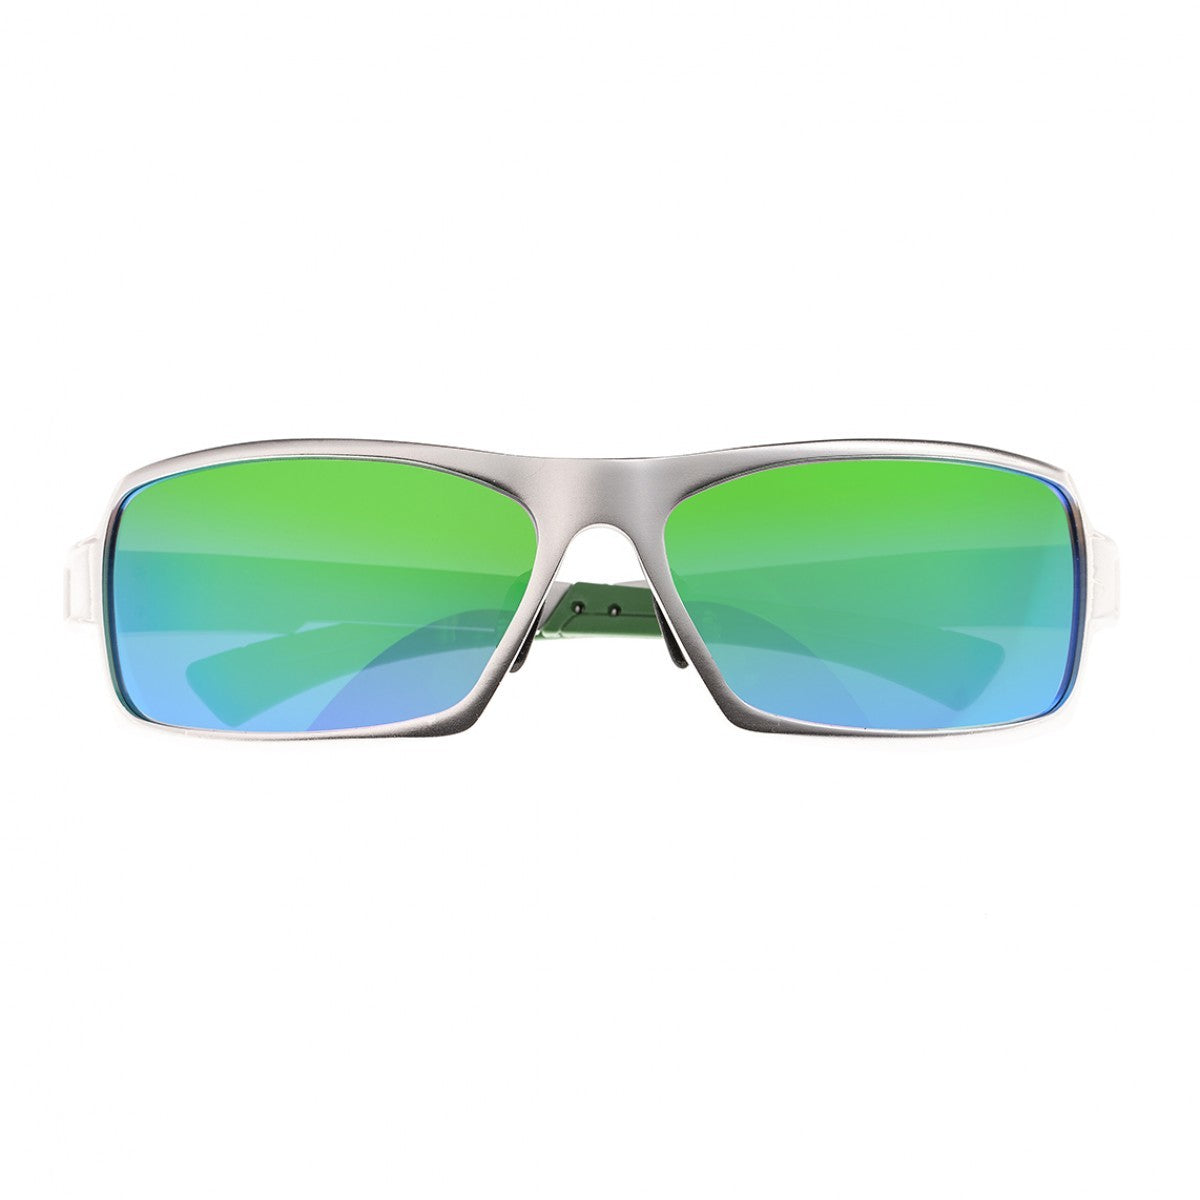 Breed Cosmos Aluminium Polarized Sunglasses - Silver/Blue-Green - BSG013SR